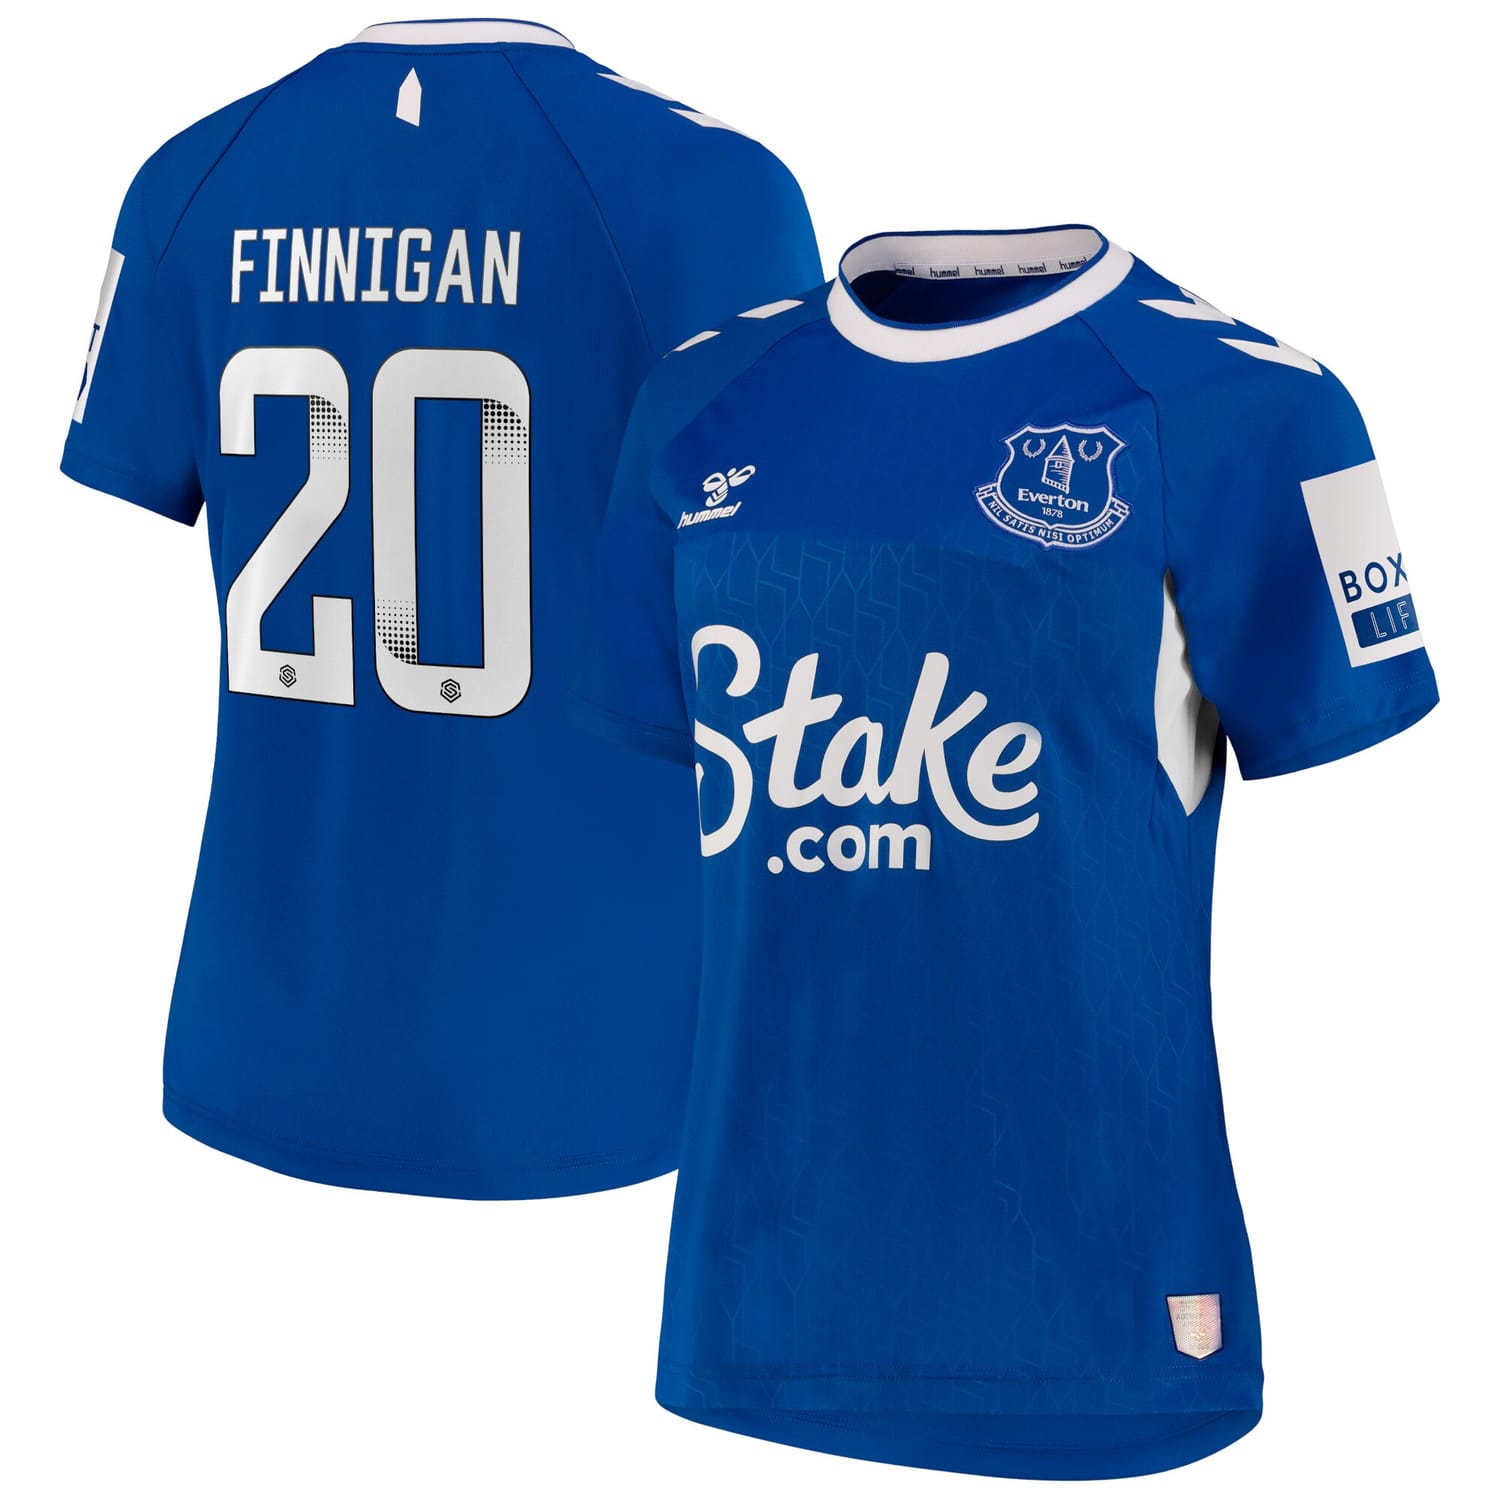 Premier League Everton Home Jersey Shirt 2022-23 player Megan Finnigan 20 printing for Women